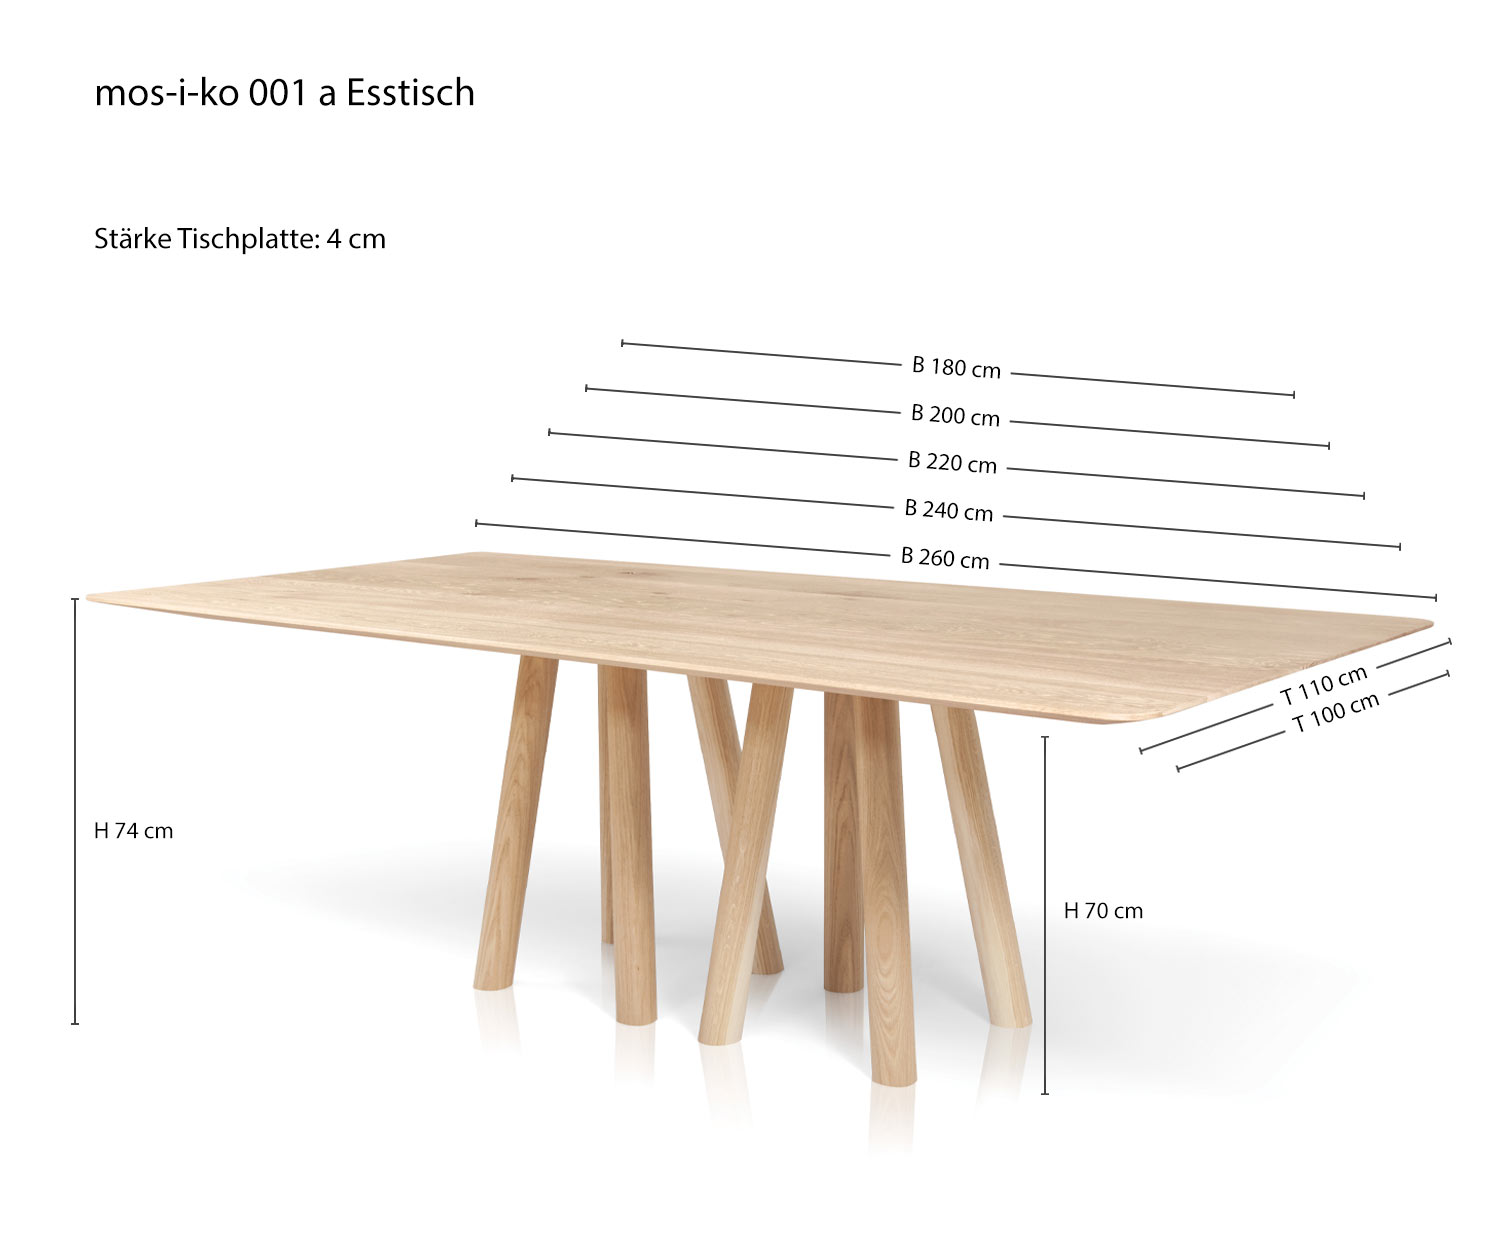 Designer Table de salle à manger al2 mos i ko 001 a Esquisse Dimensions Dimensions